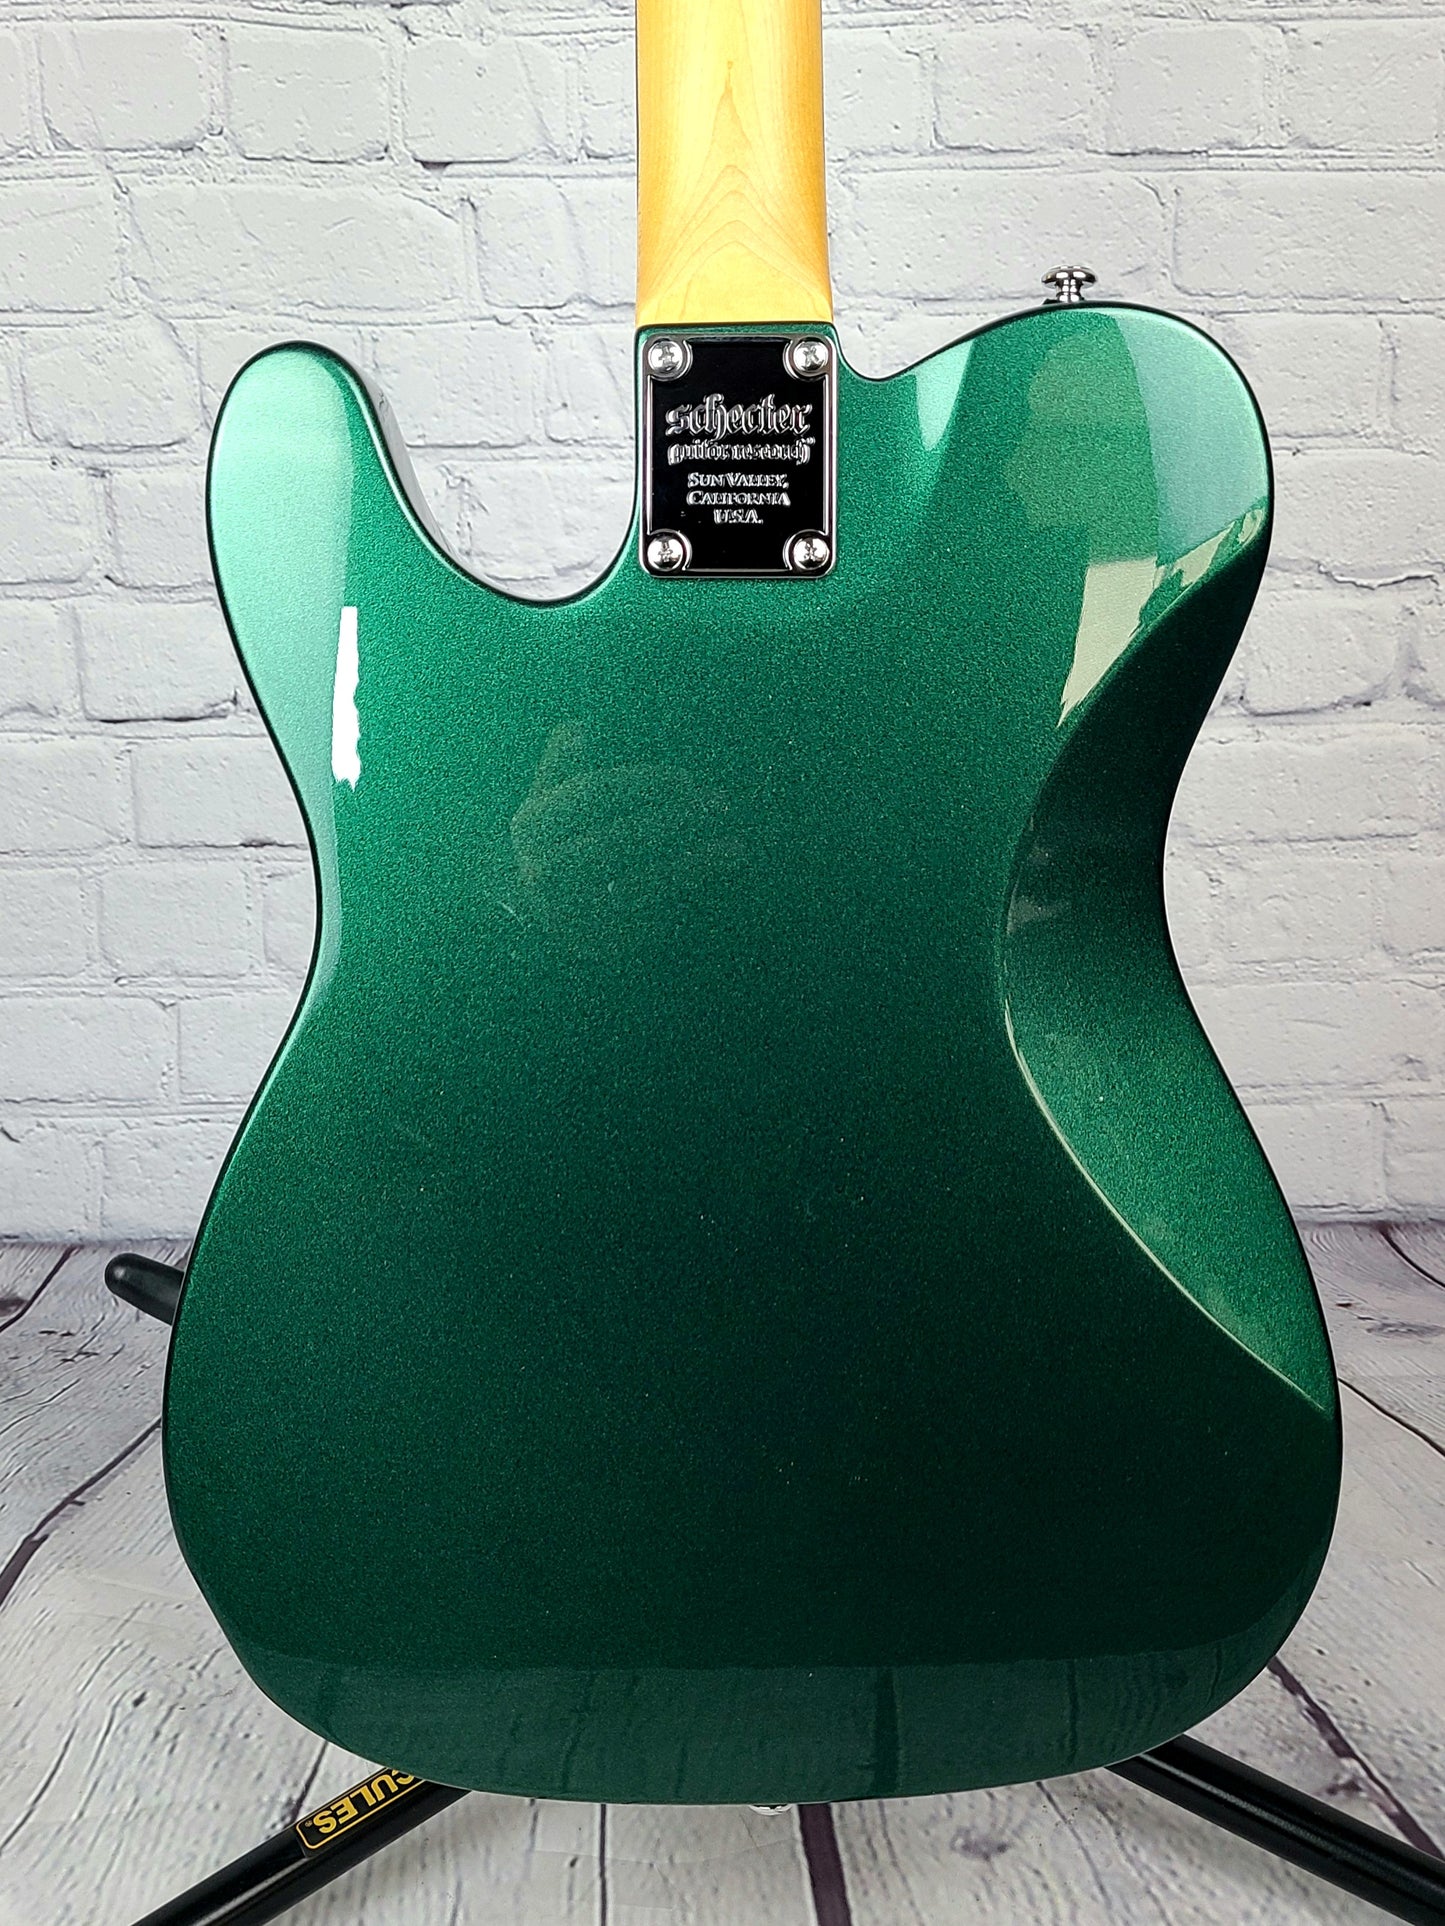 USED Schecter Fastback II B Dark Emerald Green Electric Guitar Bigsby